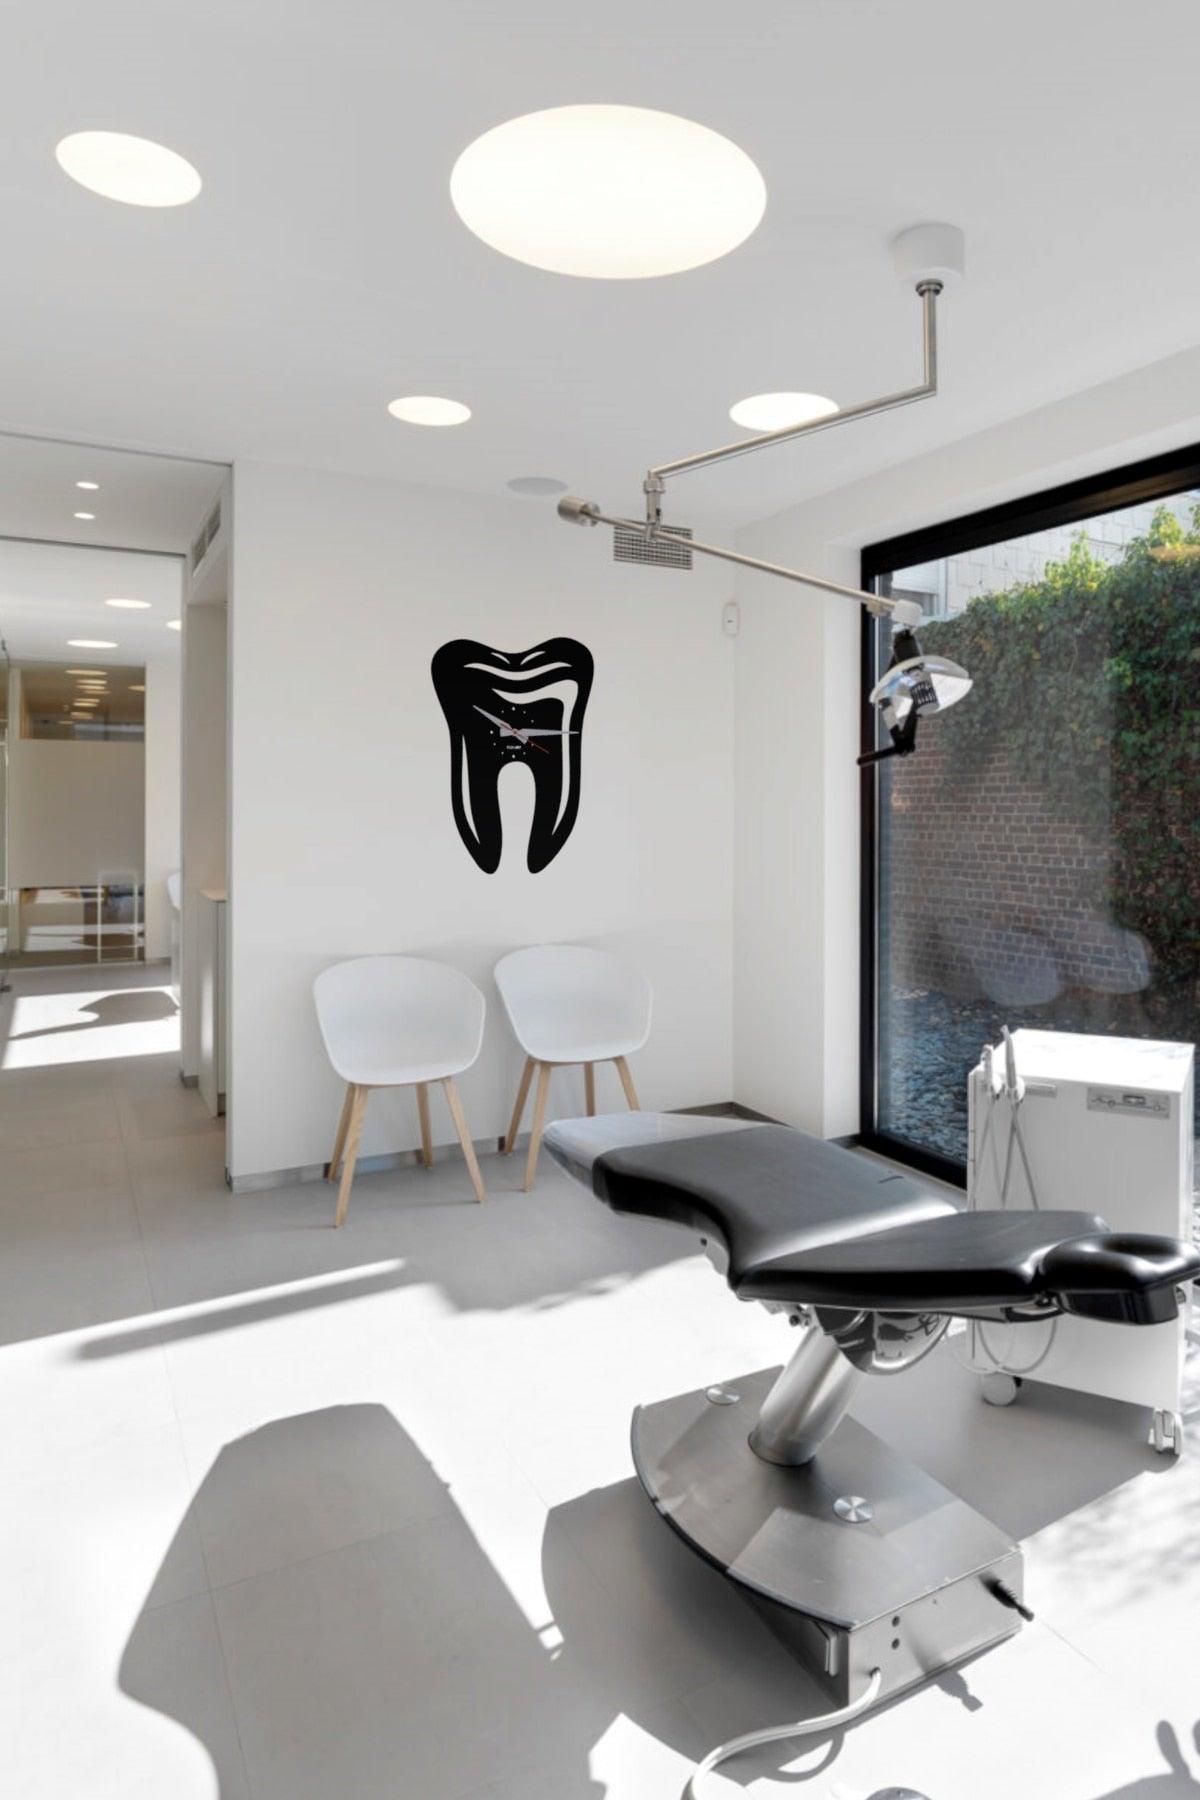 Dental Art Themed Wall Clock Gift for Dental Clinics Wall clock for Dentists and Dental Surgeon Wall clock gifts for dentists